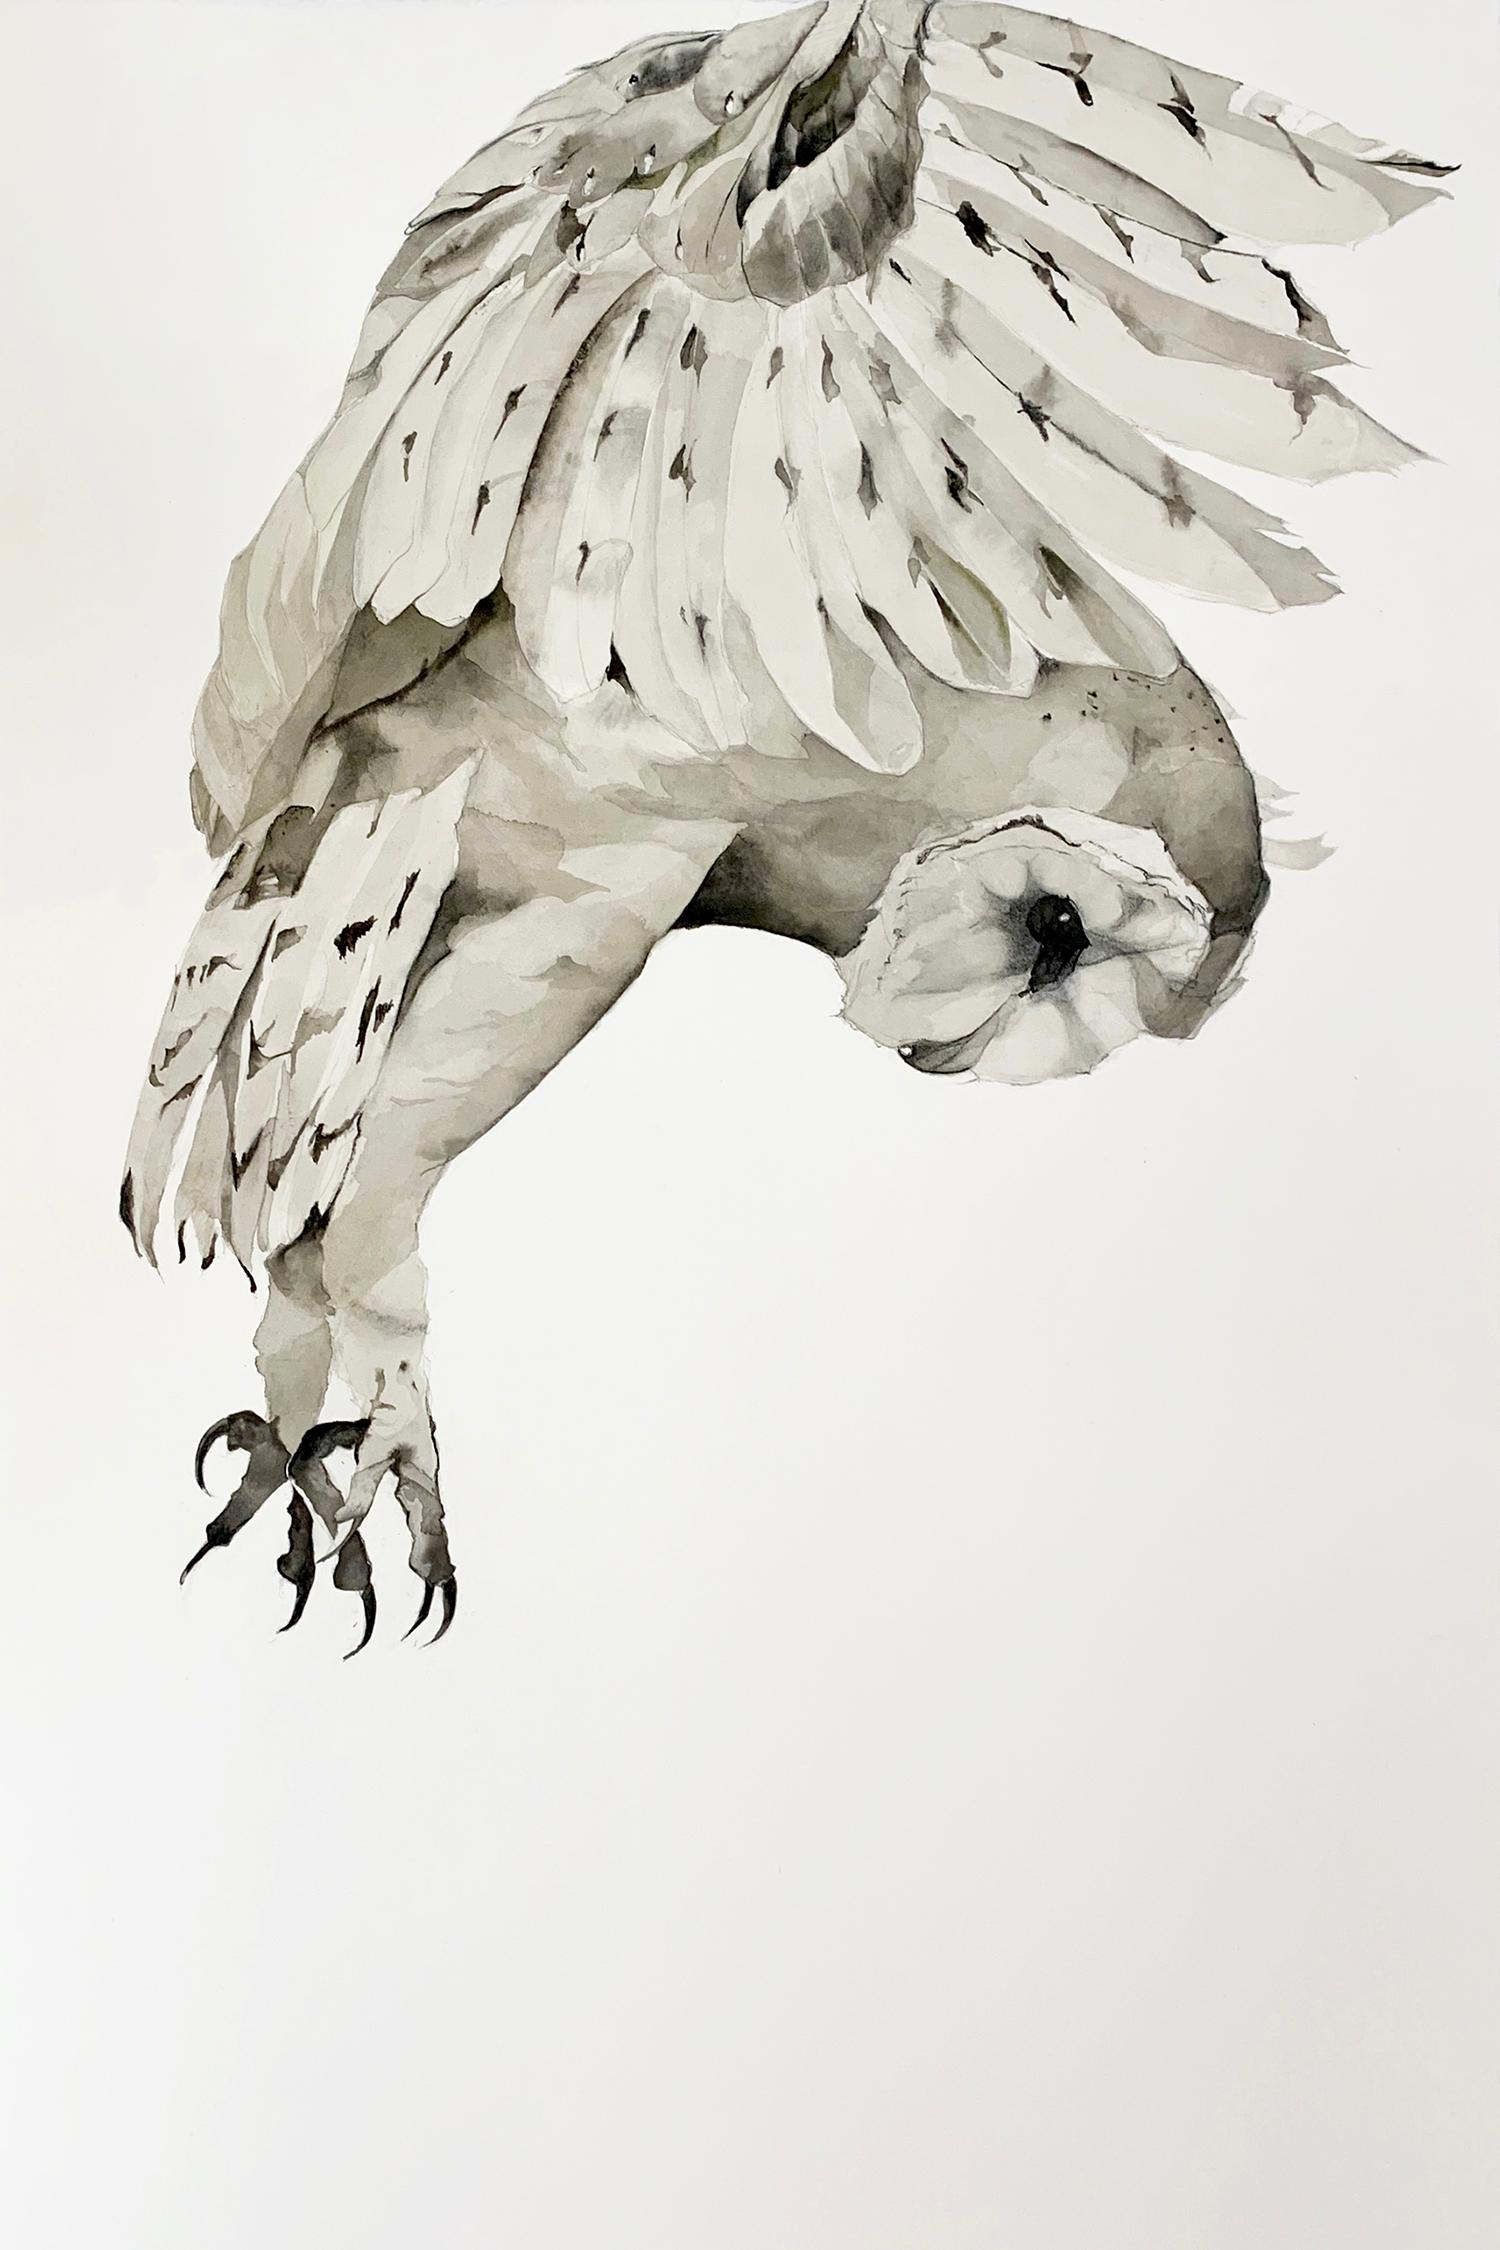 Heather Lancaster Animal Art - "Lift" - Large Scale Contemporary Gestural Animal Drawings - Barn Owl - Dürer